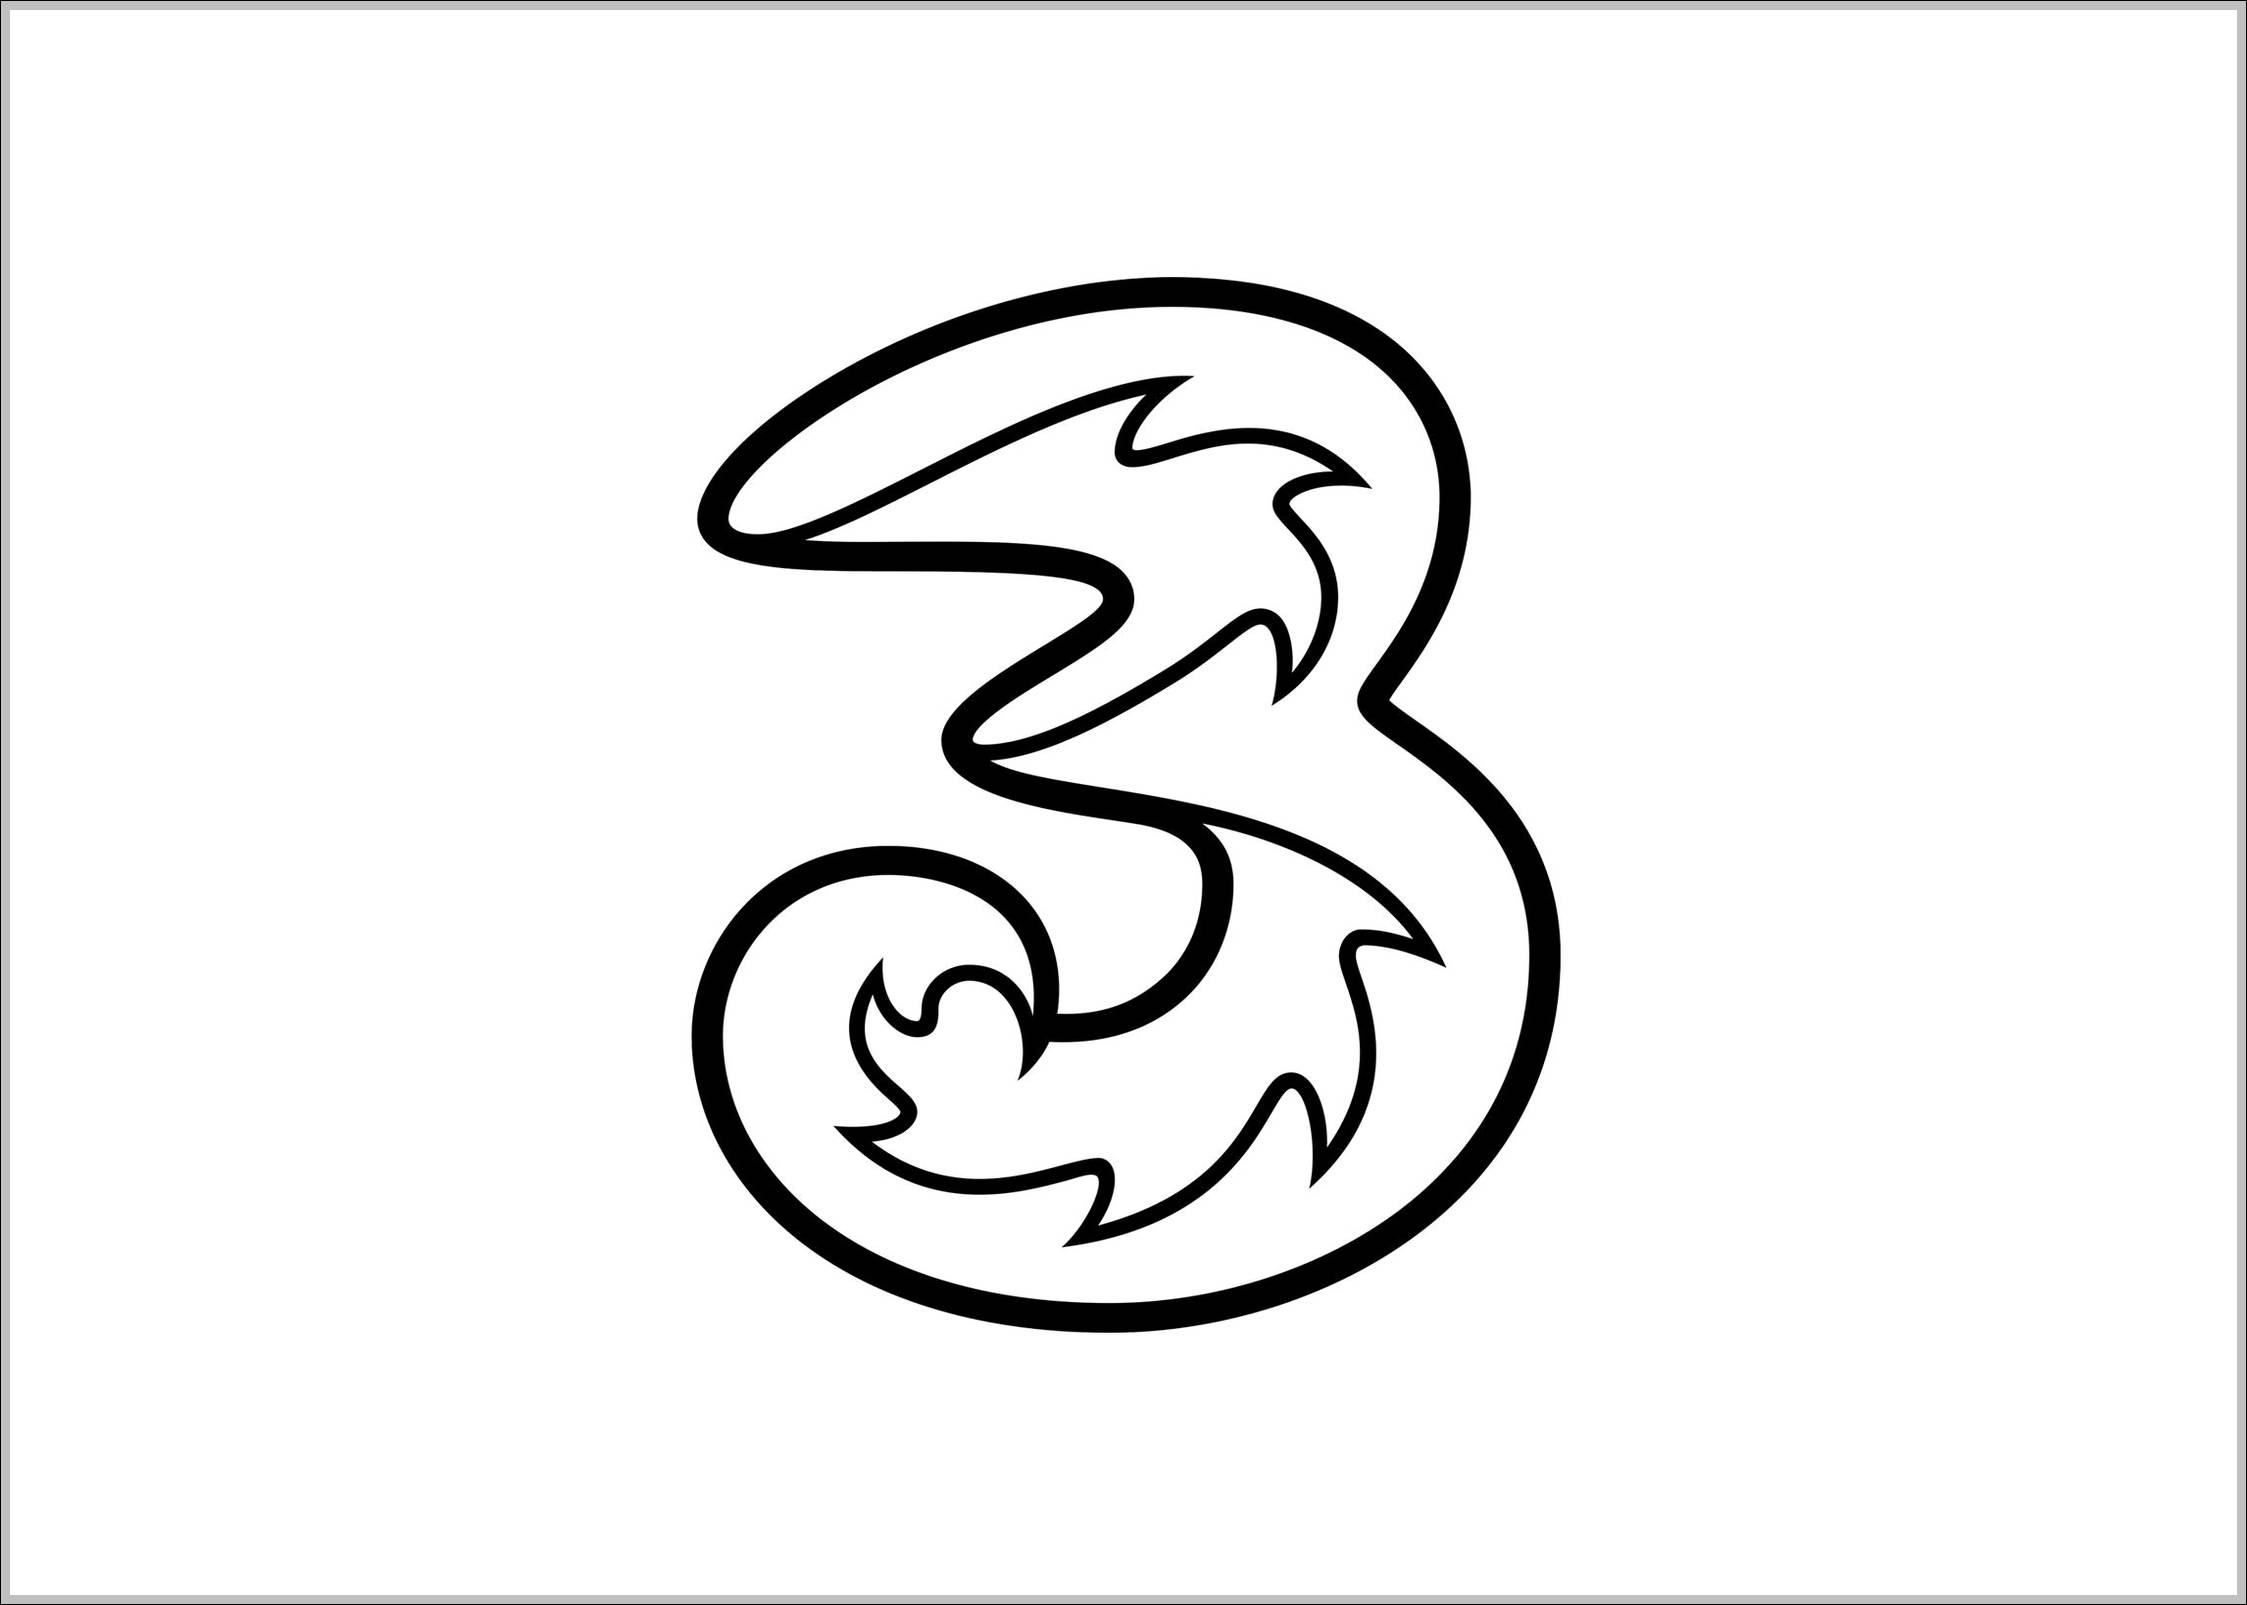 Hutchison 3G 3 brand logo